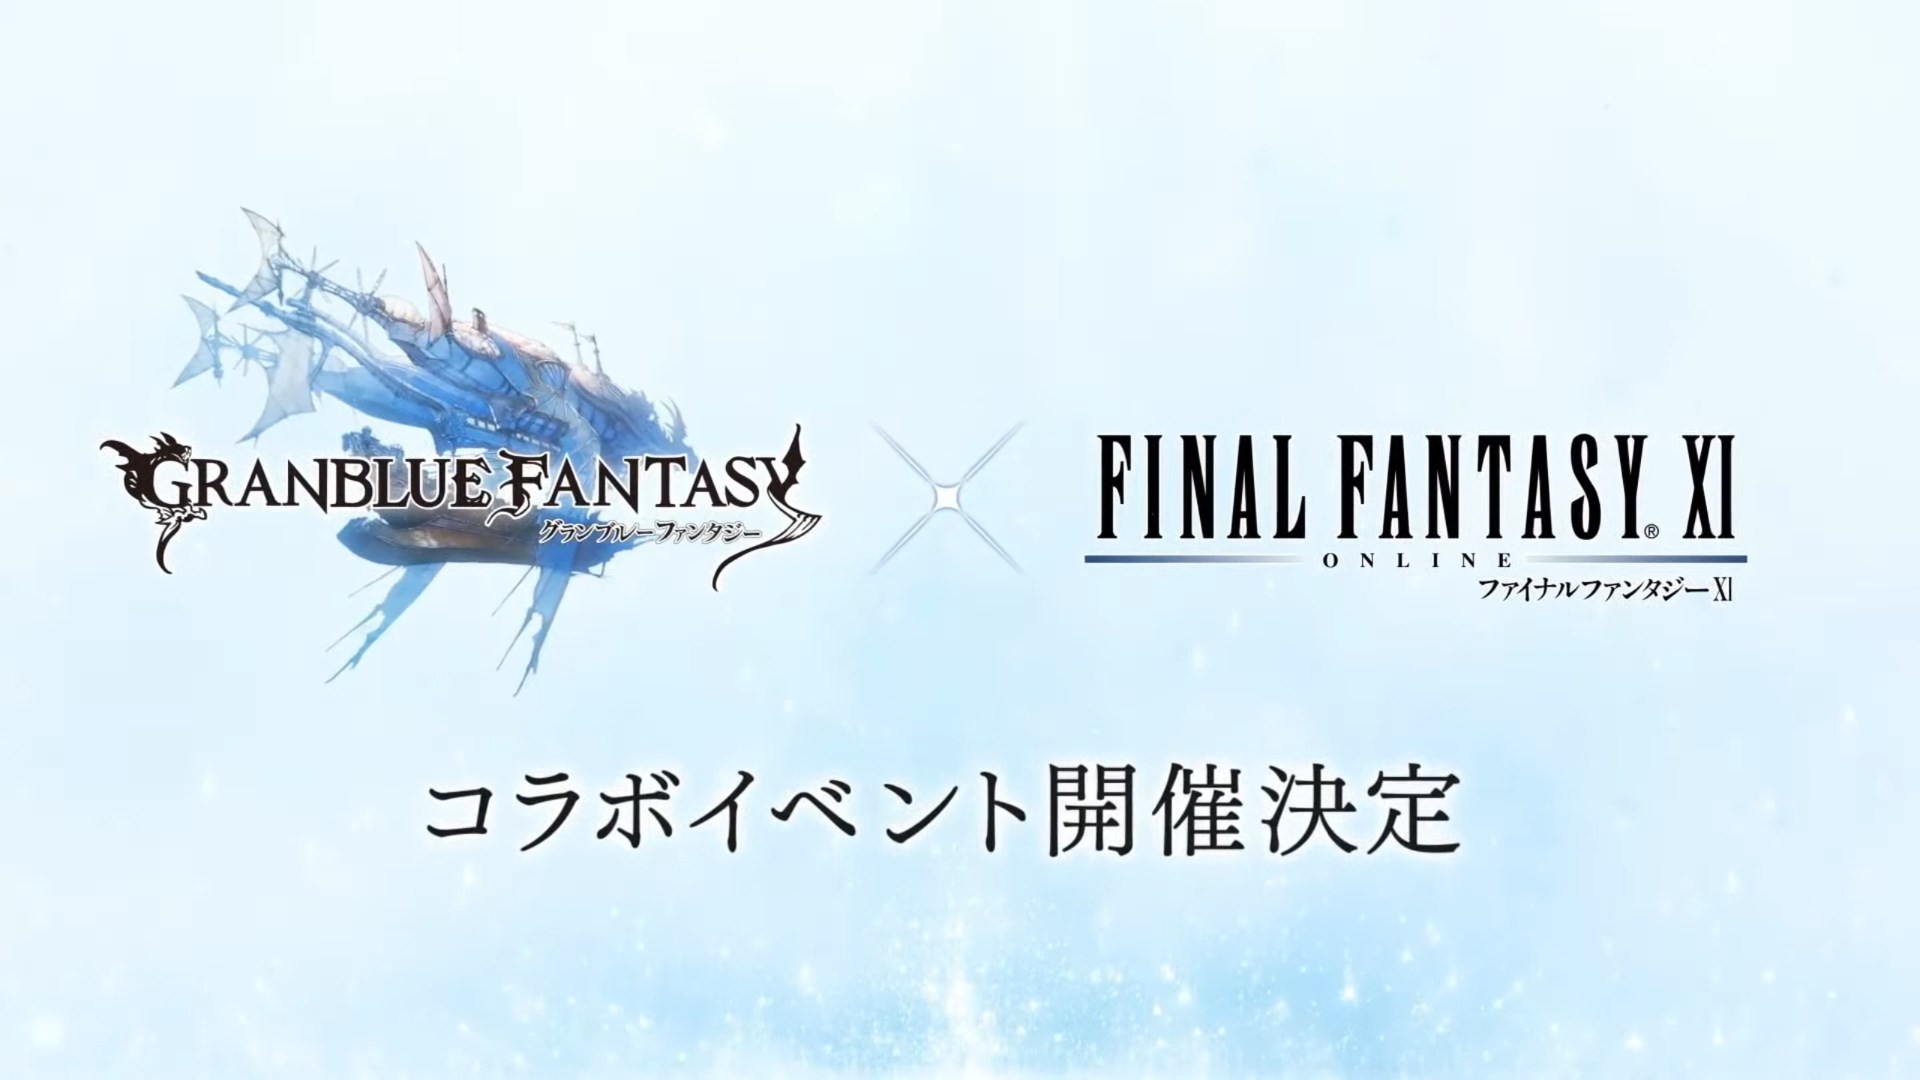 Granblue Fantasy Final Fantasy XI